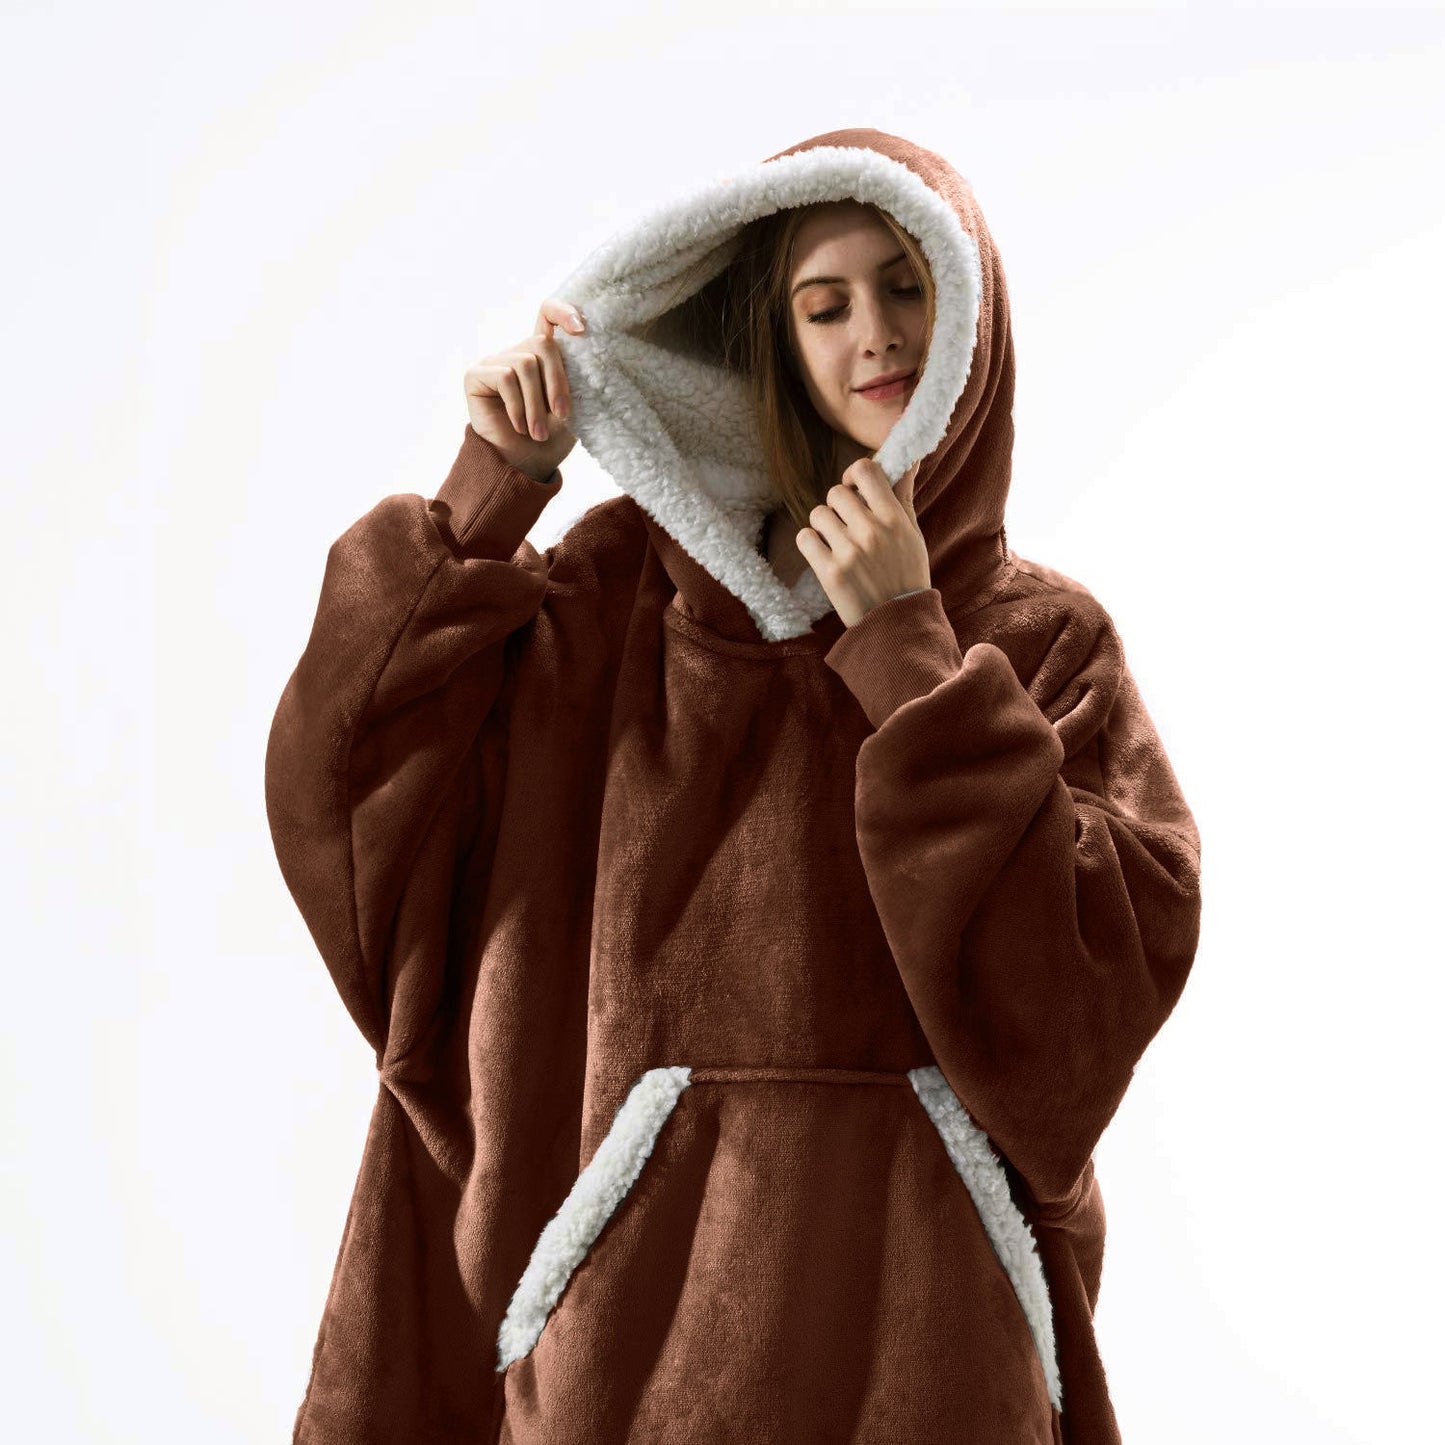 Wearable Fleece Hoodies Sleepwear for Watching TV-Blankets-Brown-One Size-Free Shipping Leatheretro